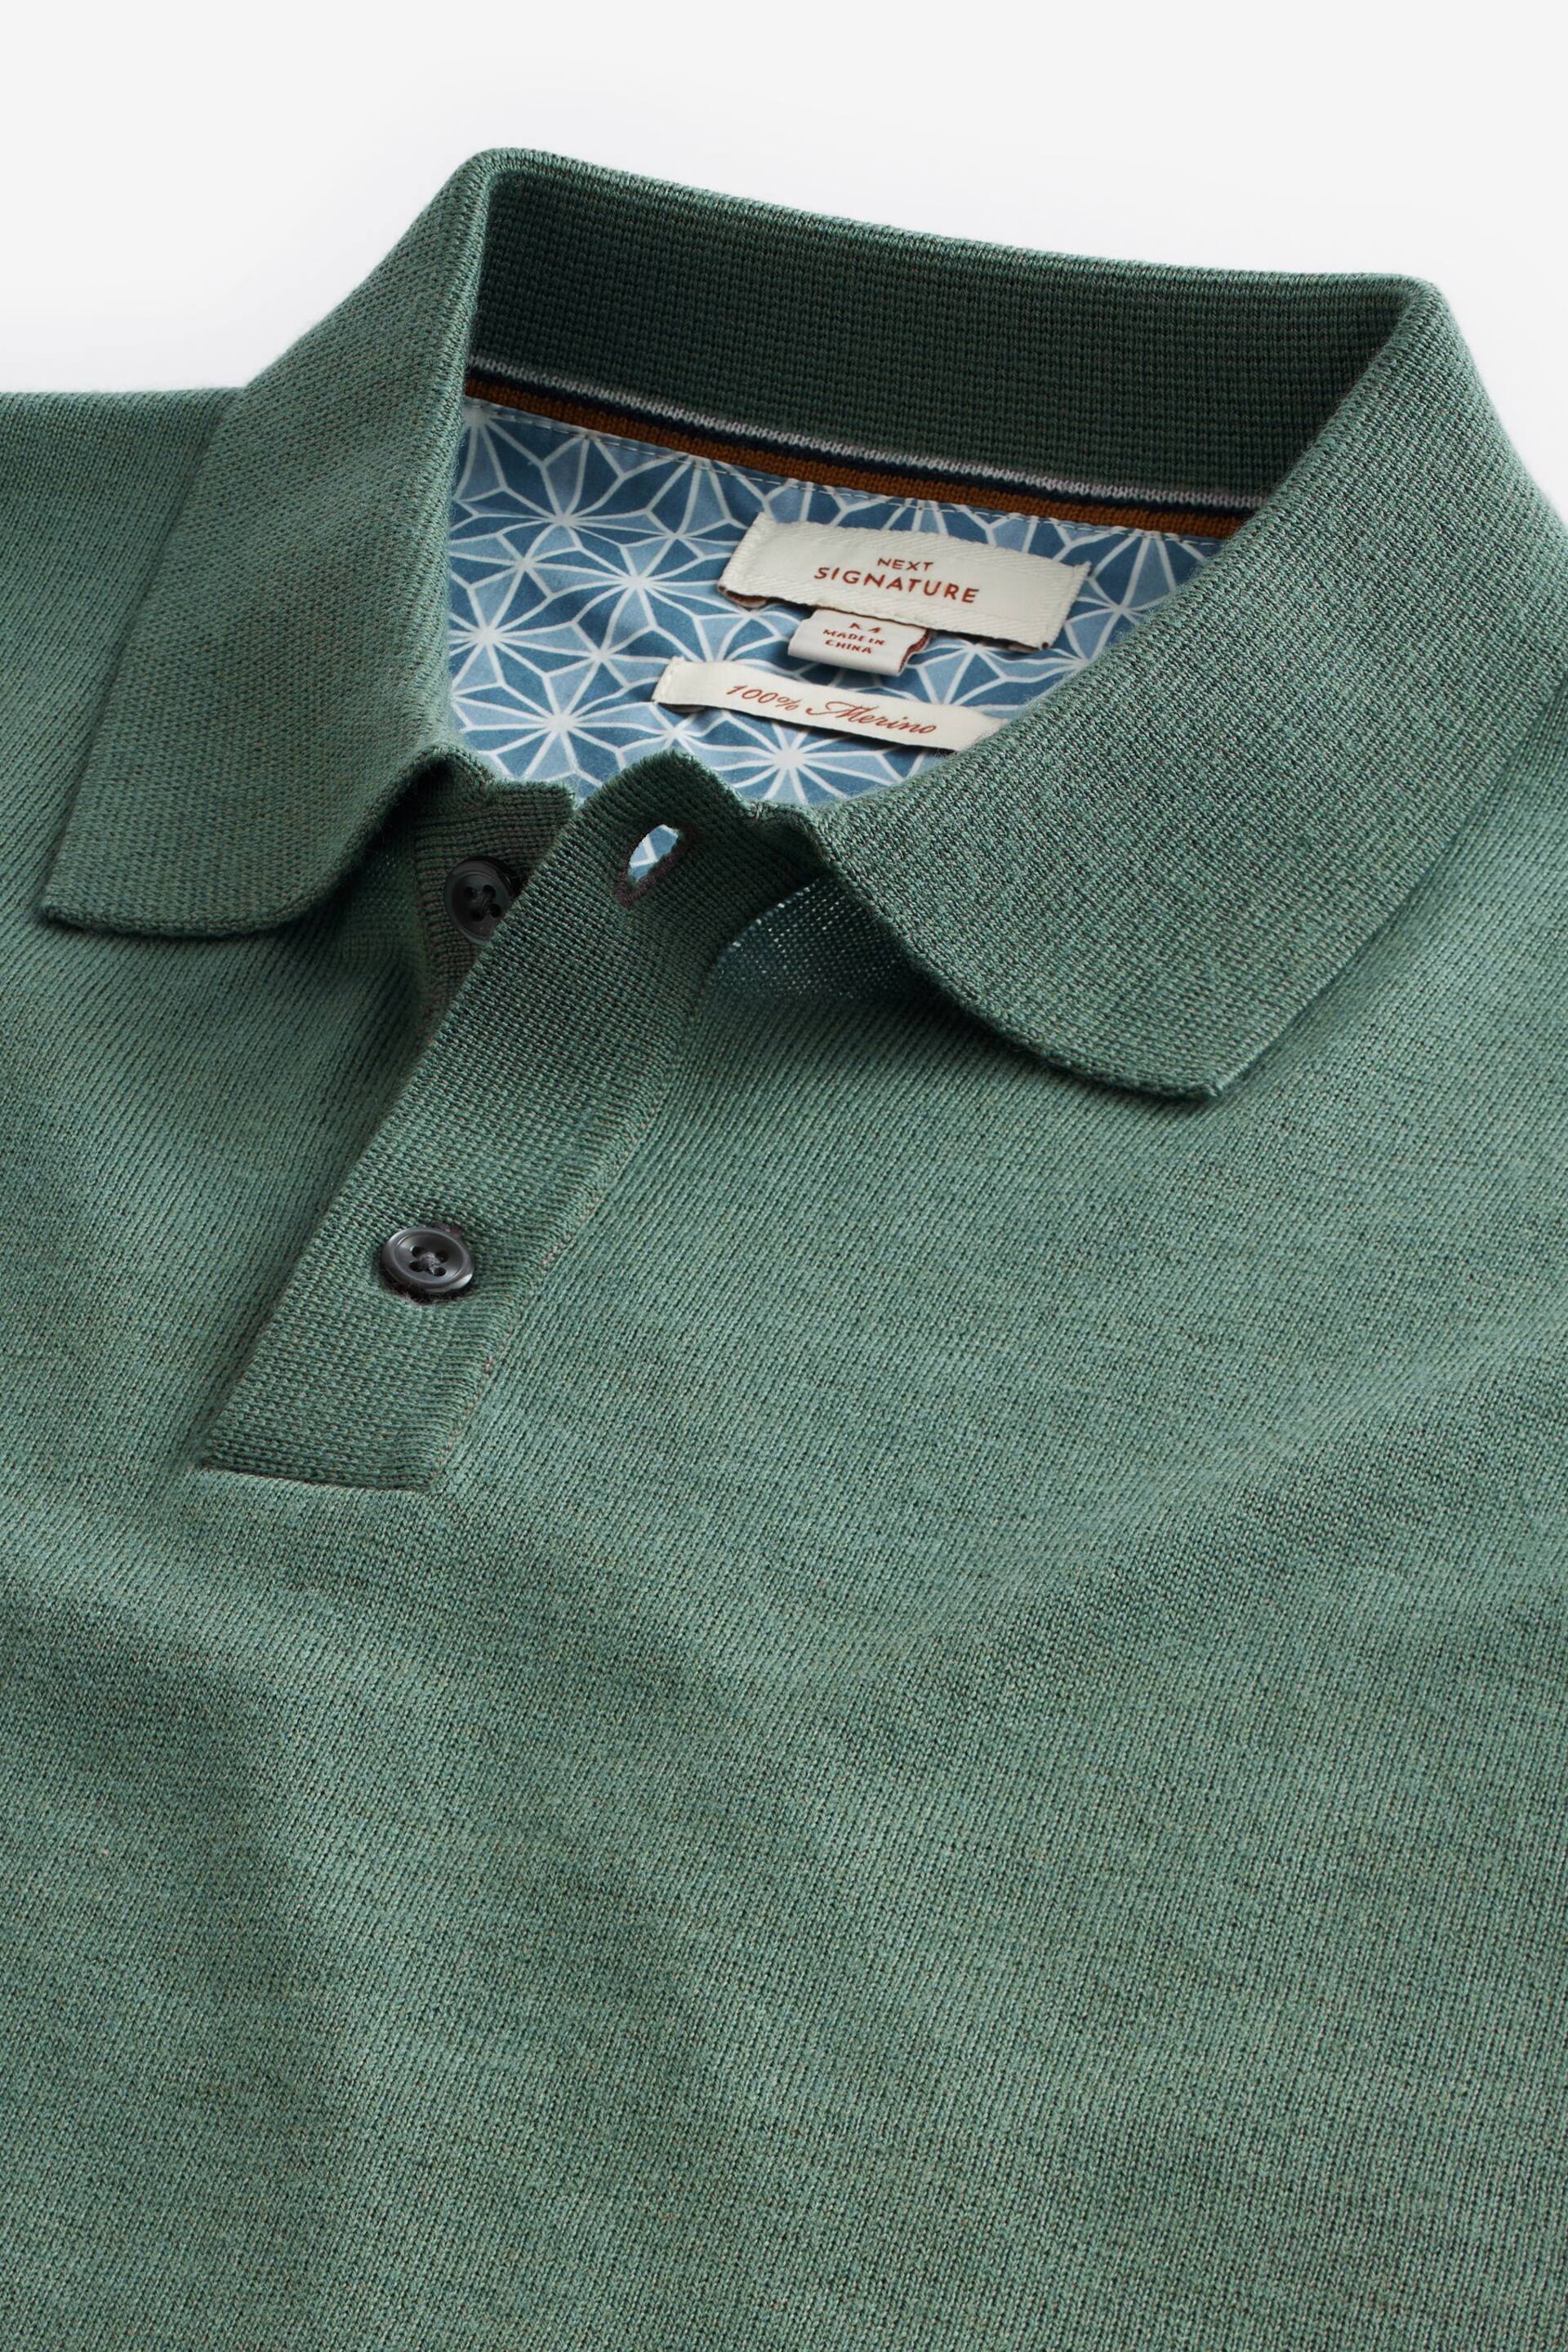 Sage Green Knitted Premium Merino Wool Regular Fit Polo Shirt - Image 3 of 4